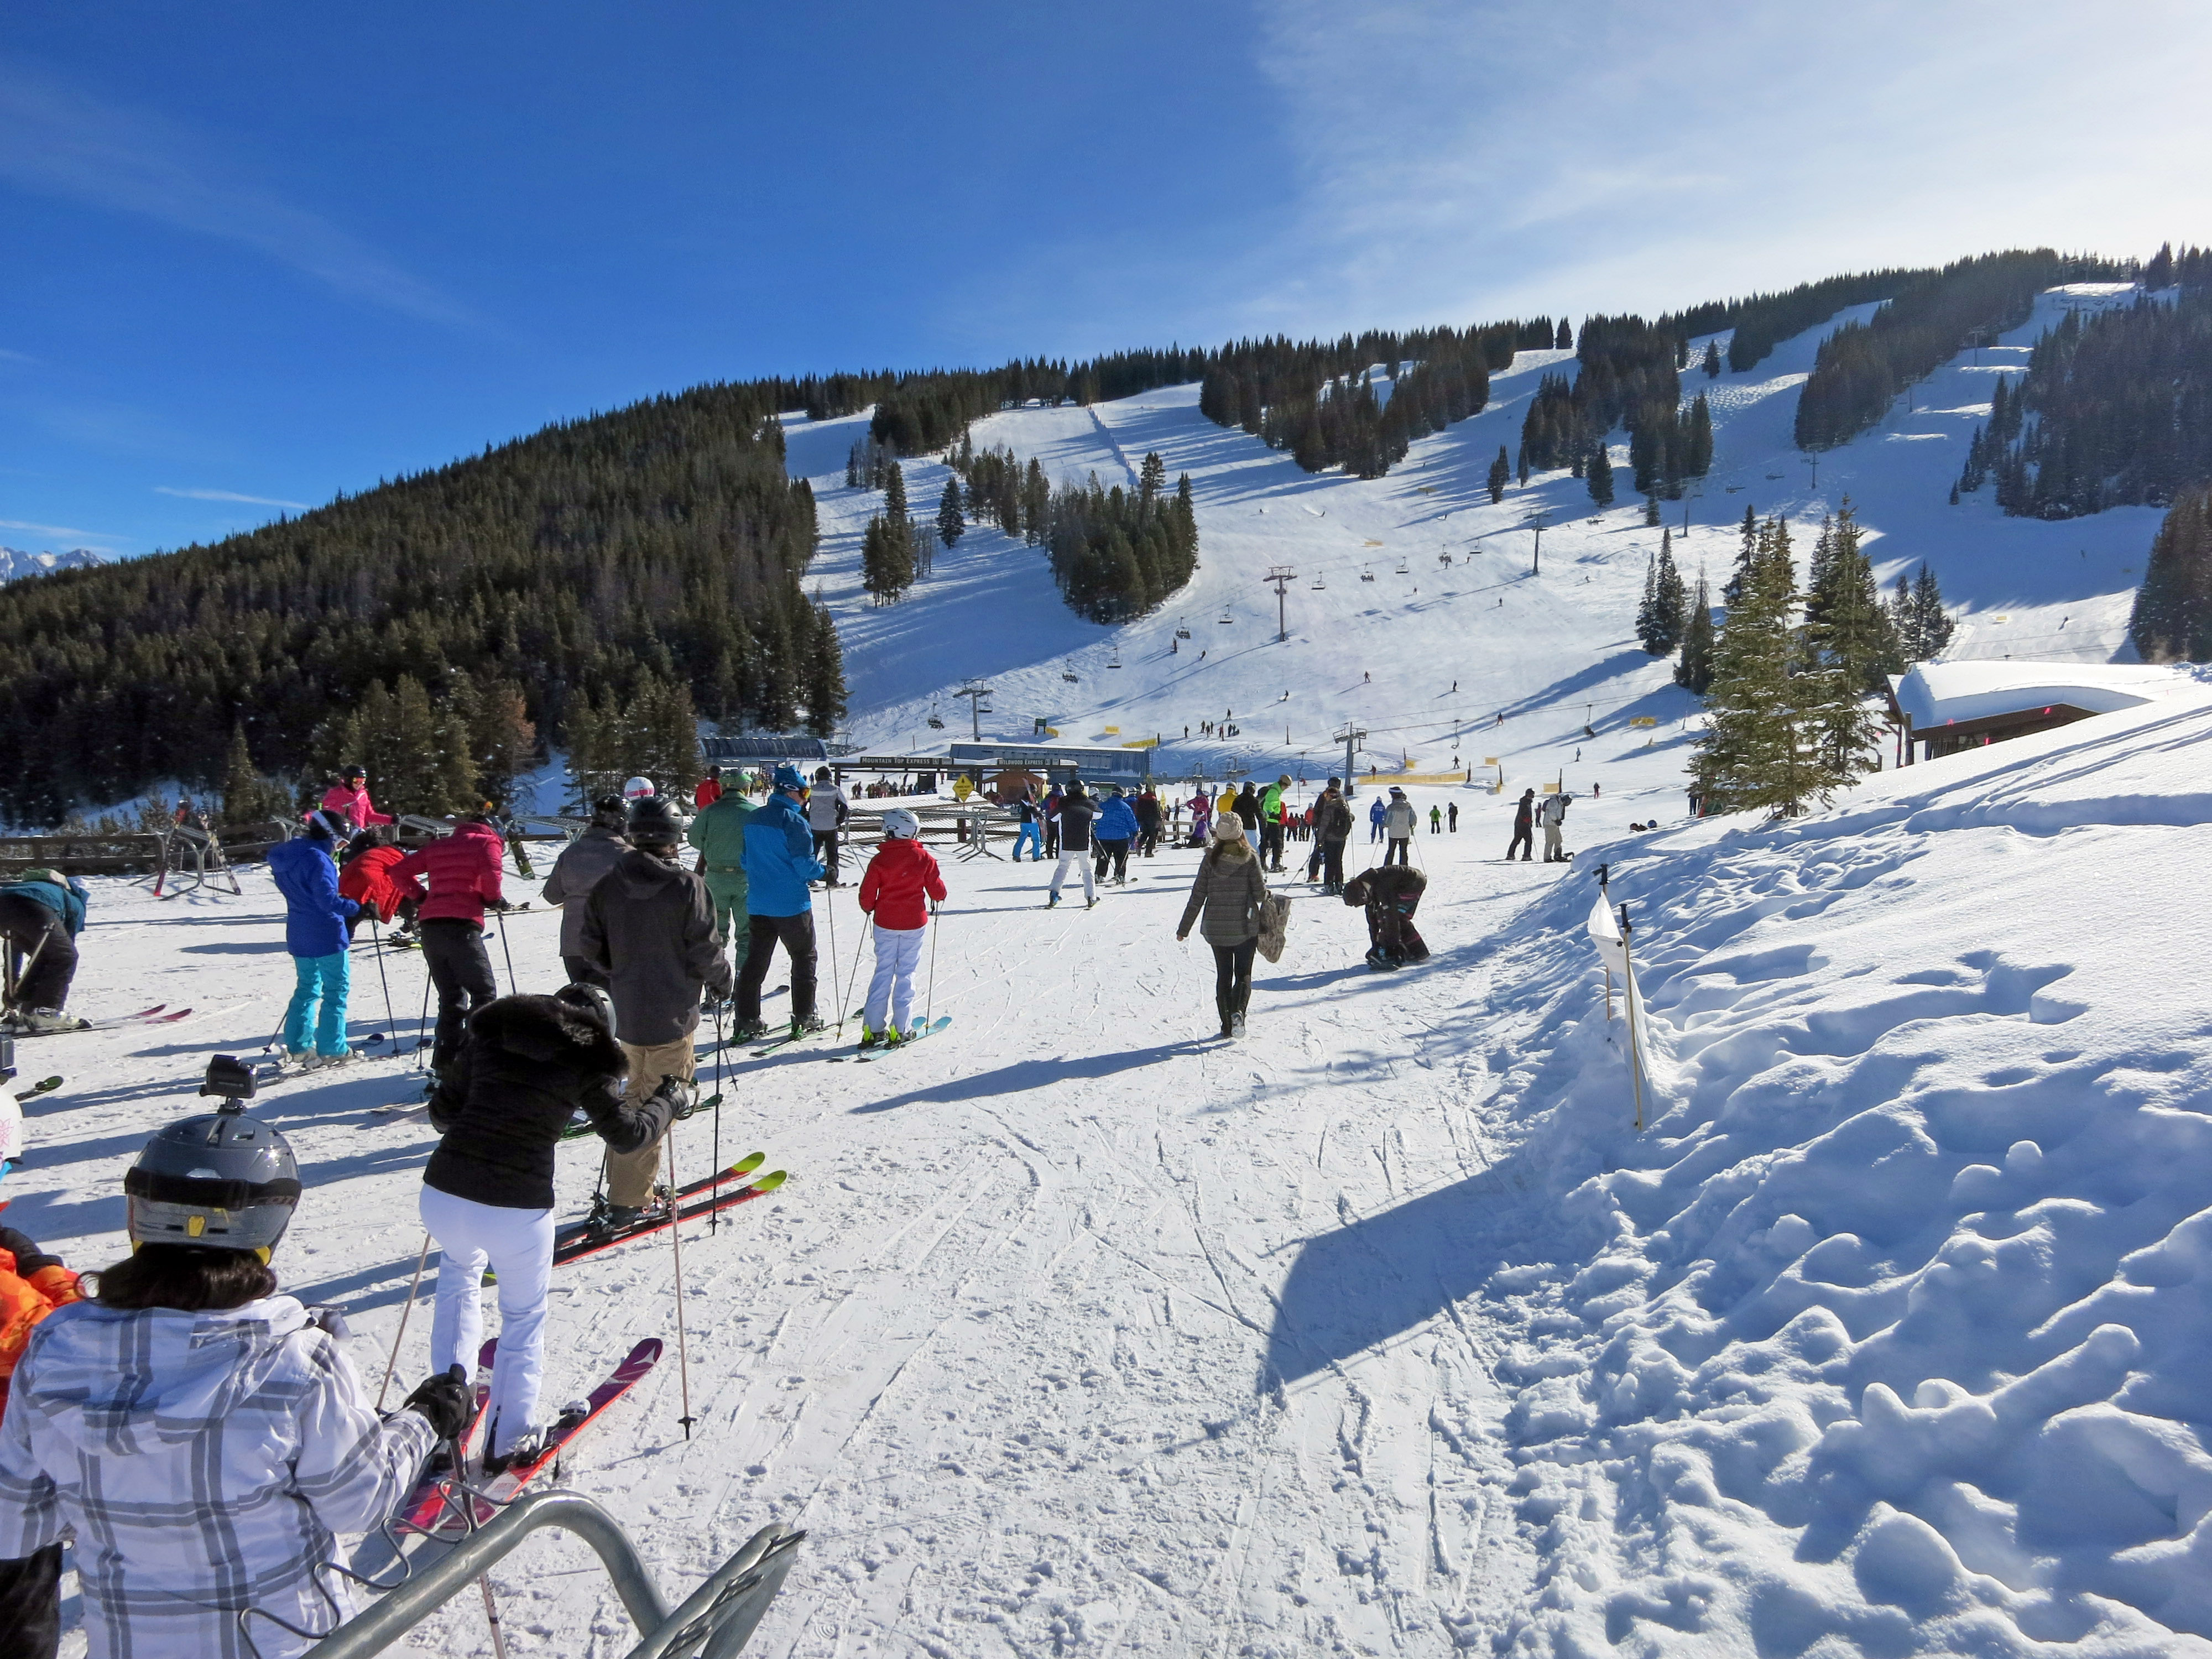 2017 Ski Vail Colorado